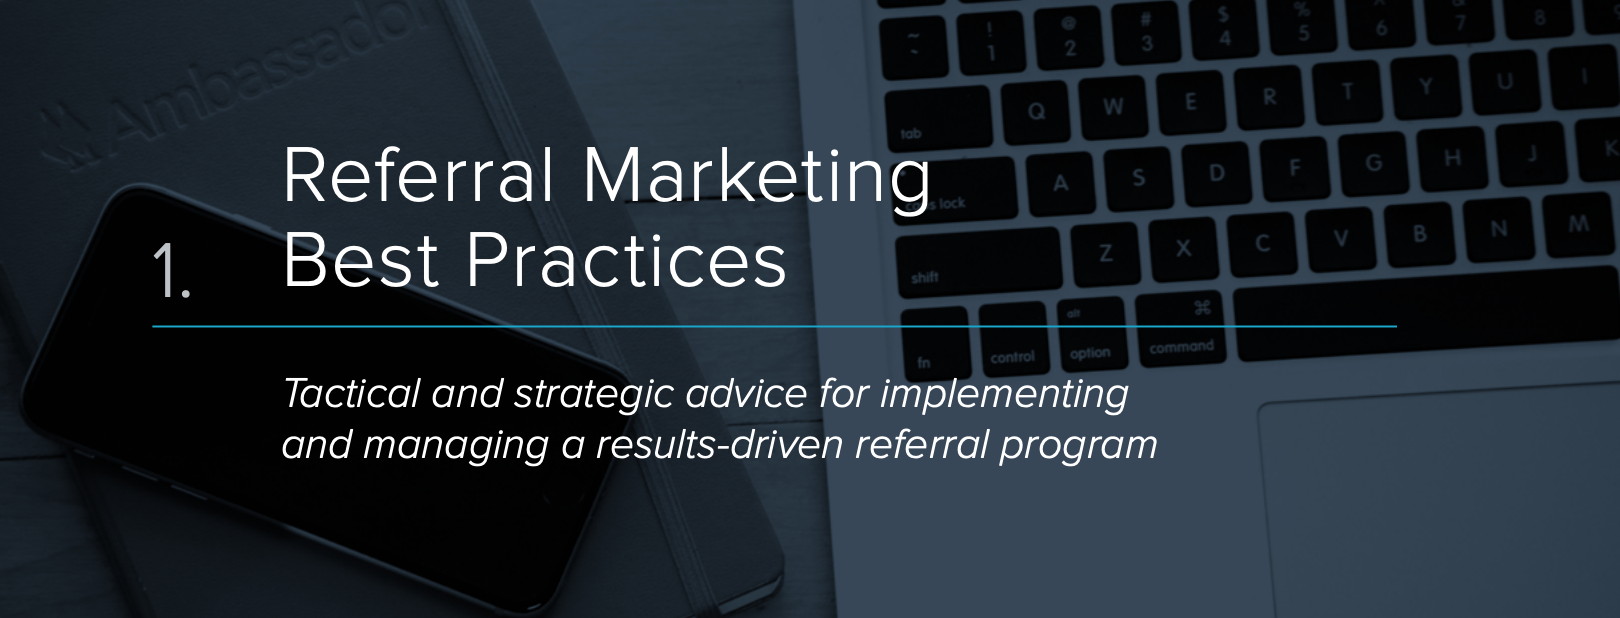 Referral Marketing Best Practices